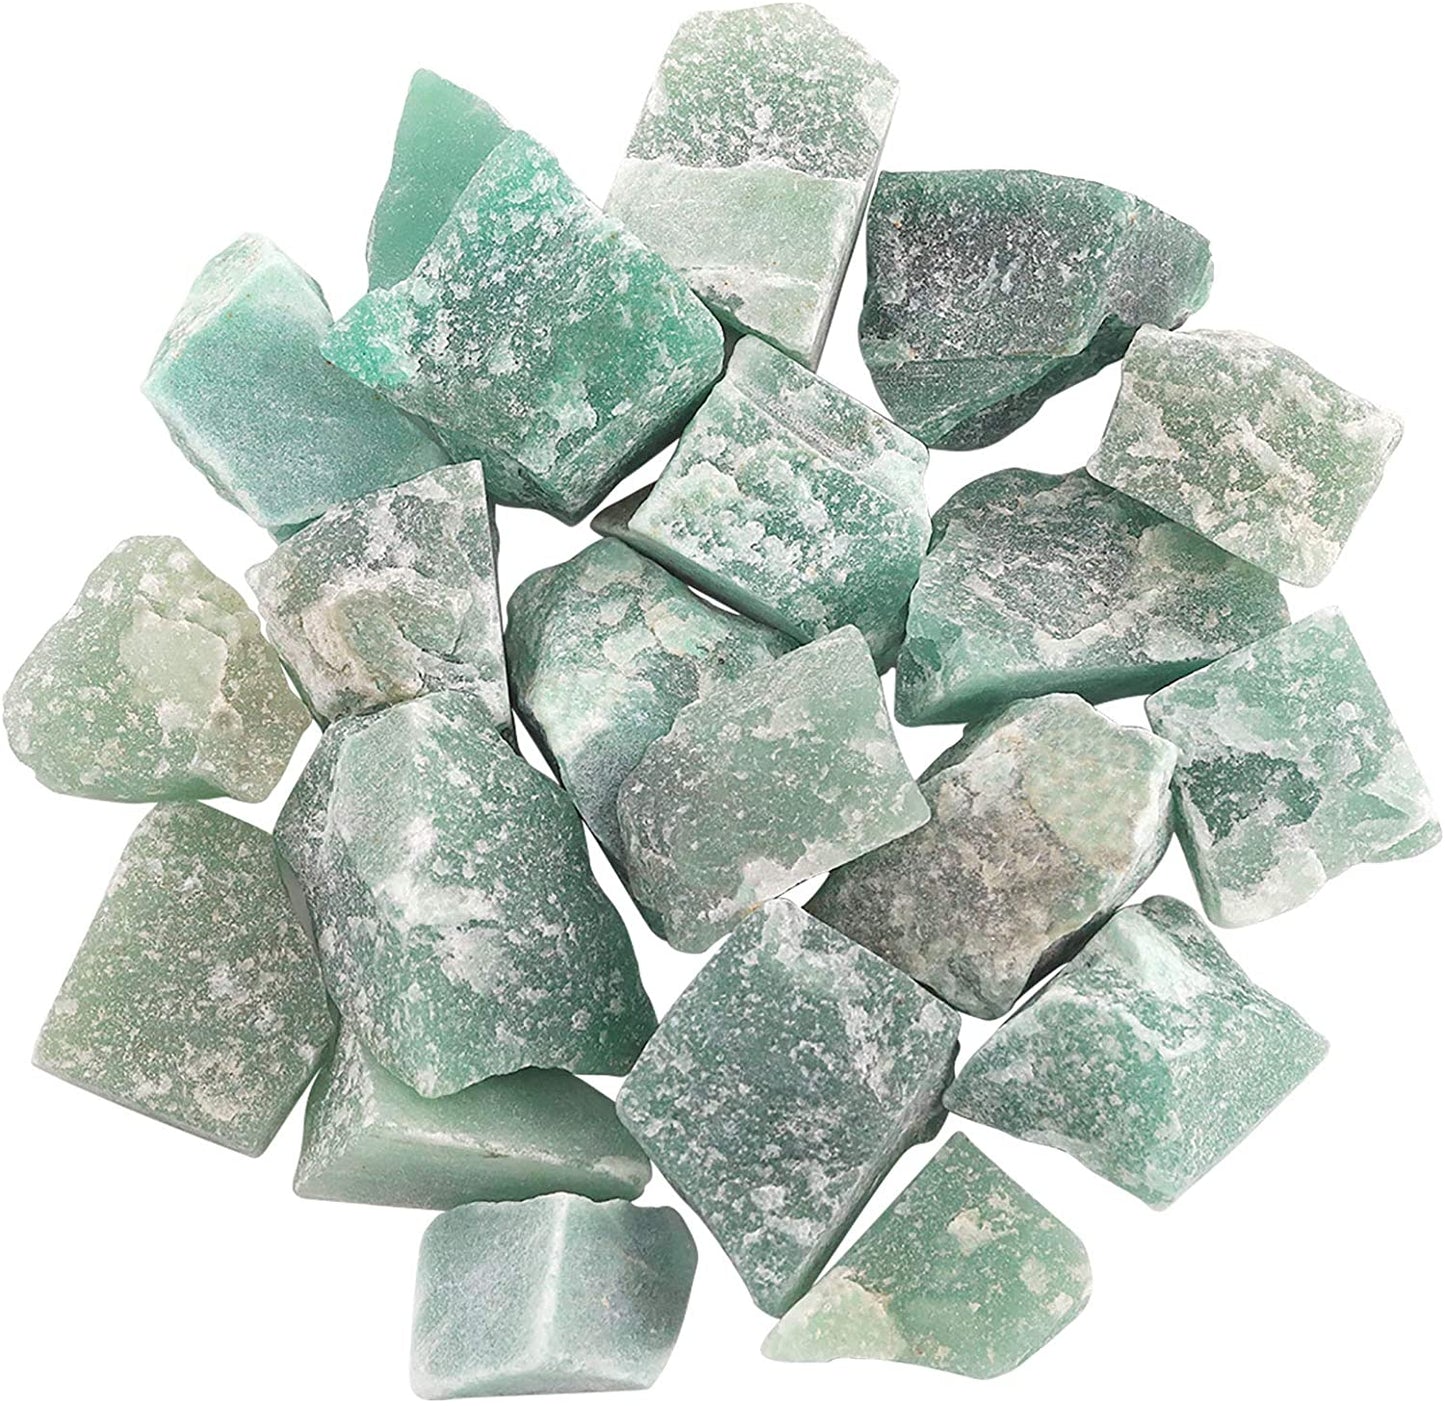 Green Aventurine Rough Crystals - Bulk Wholesale choose: 1lb, 3lbs or 5lbs